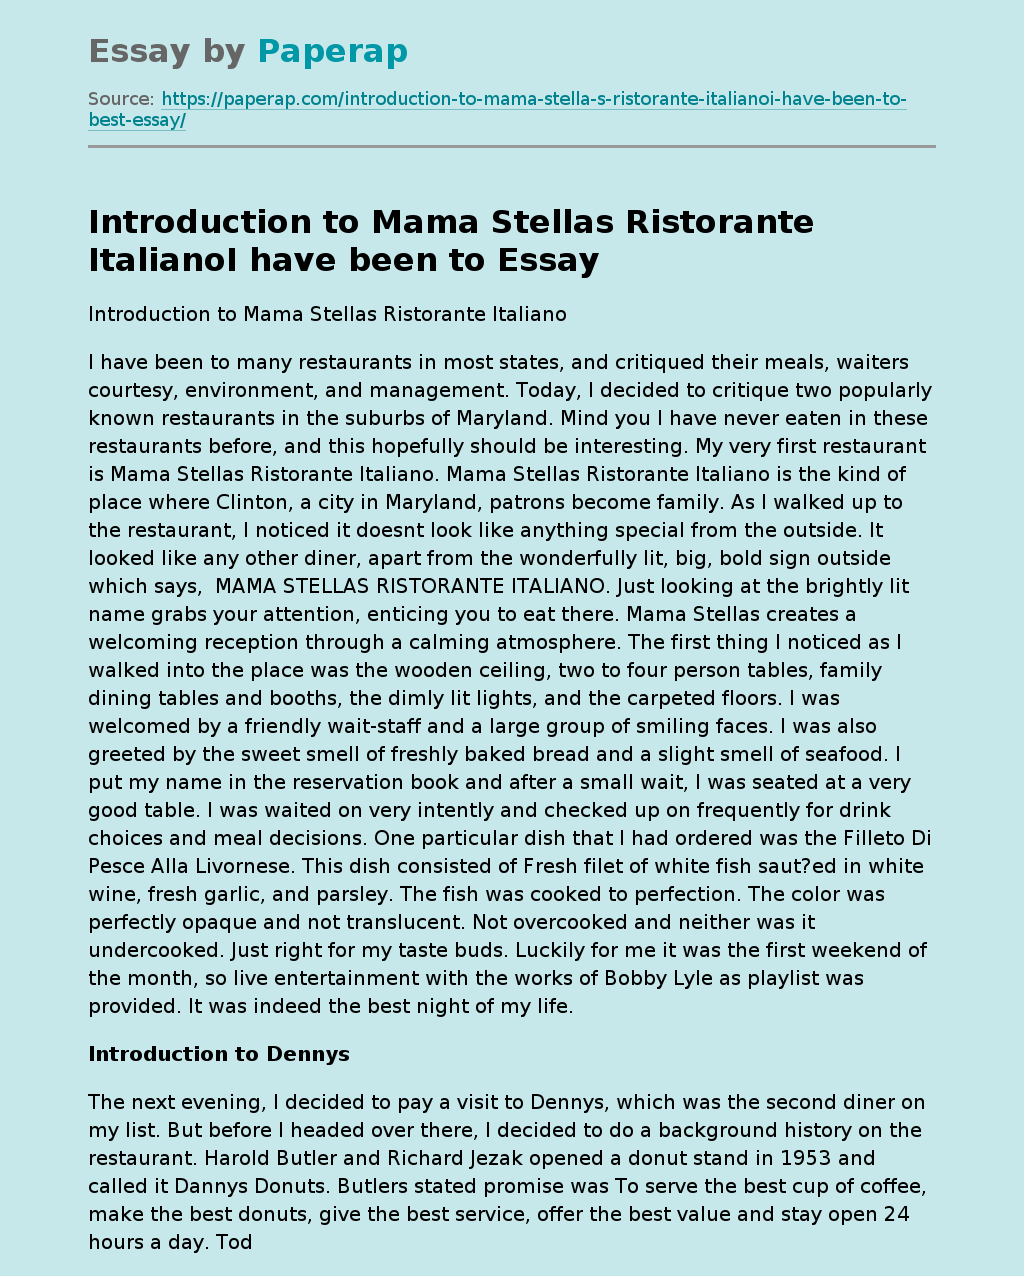 Introduction to Mama Stellas Ristorante ItalianoI have been to